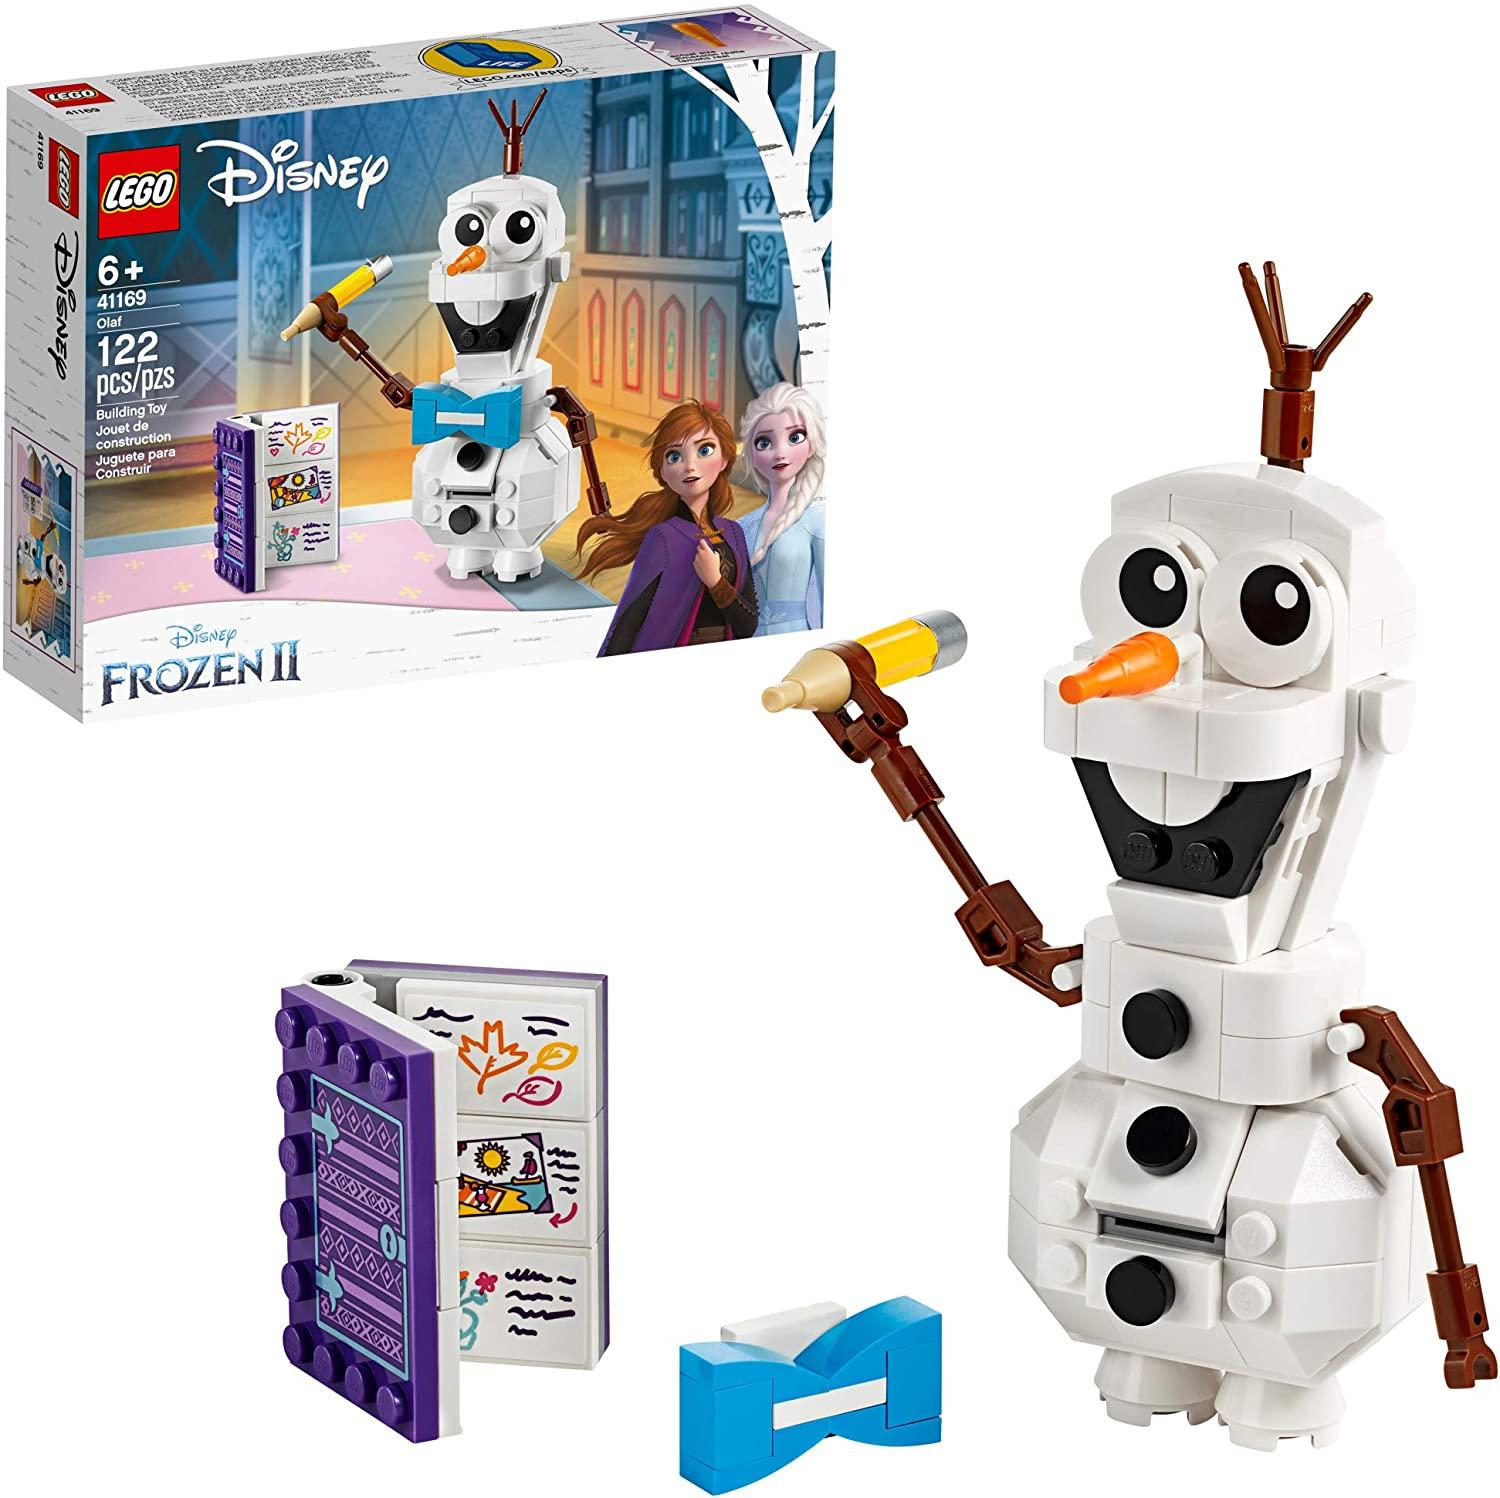 LEGO Disney Frozen II Olaf 41169 Olaf Snowman Toy Figure Building Kit for $8.95